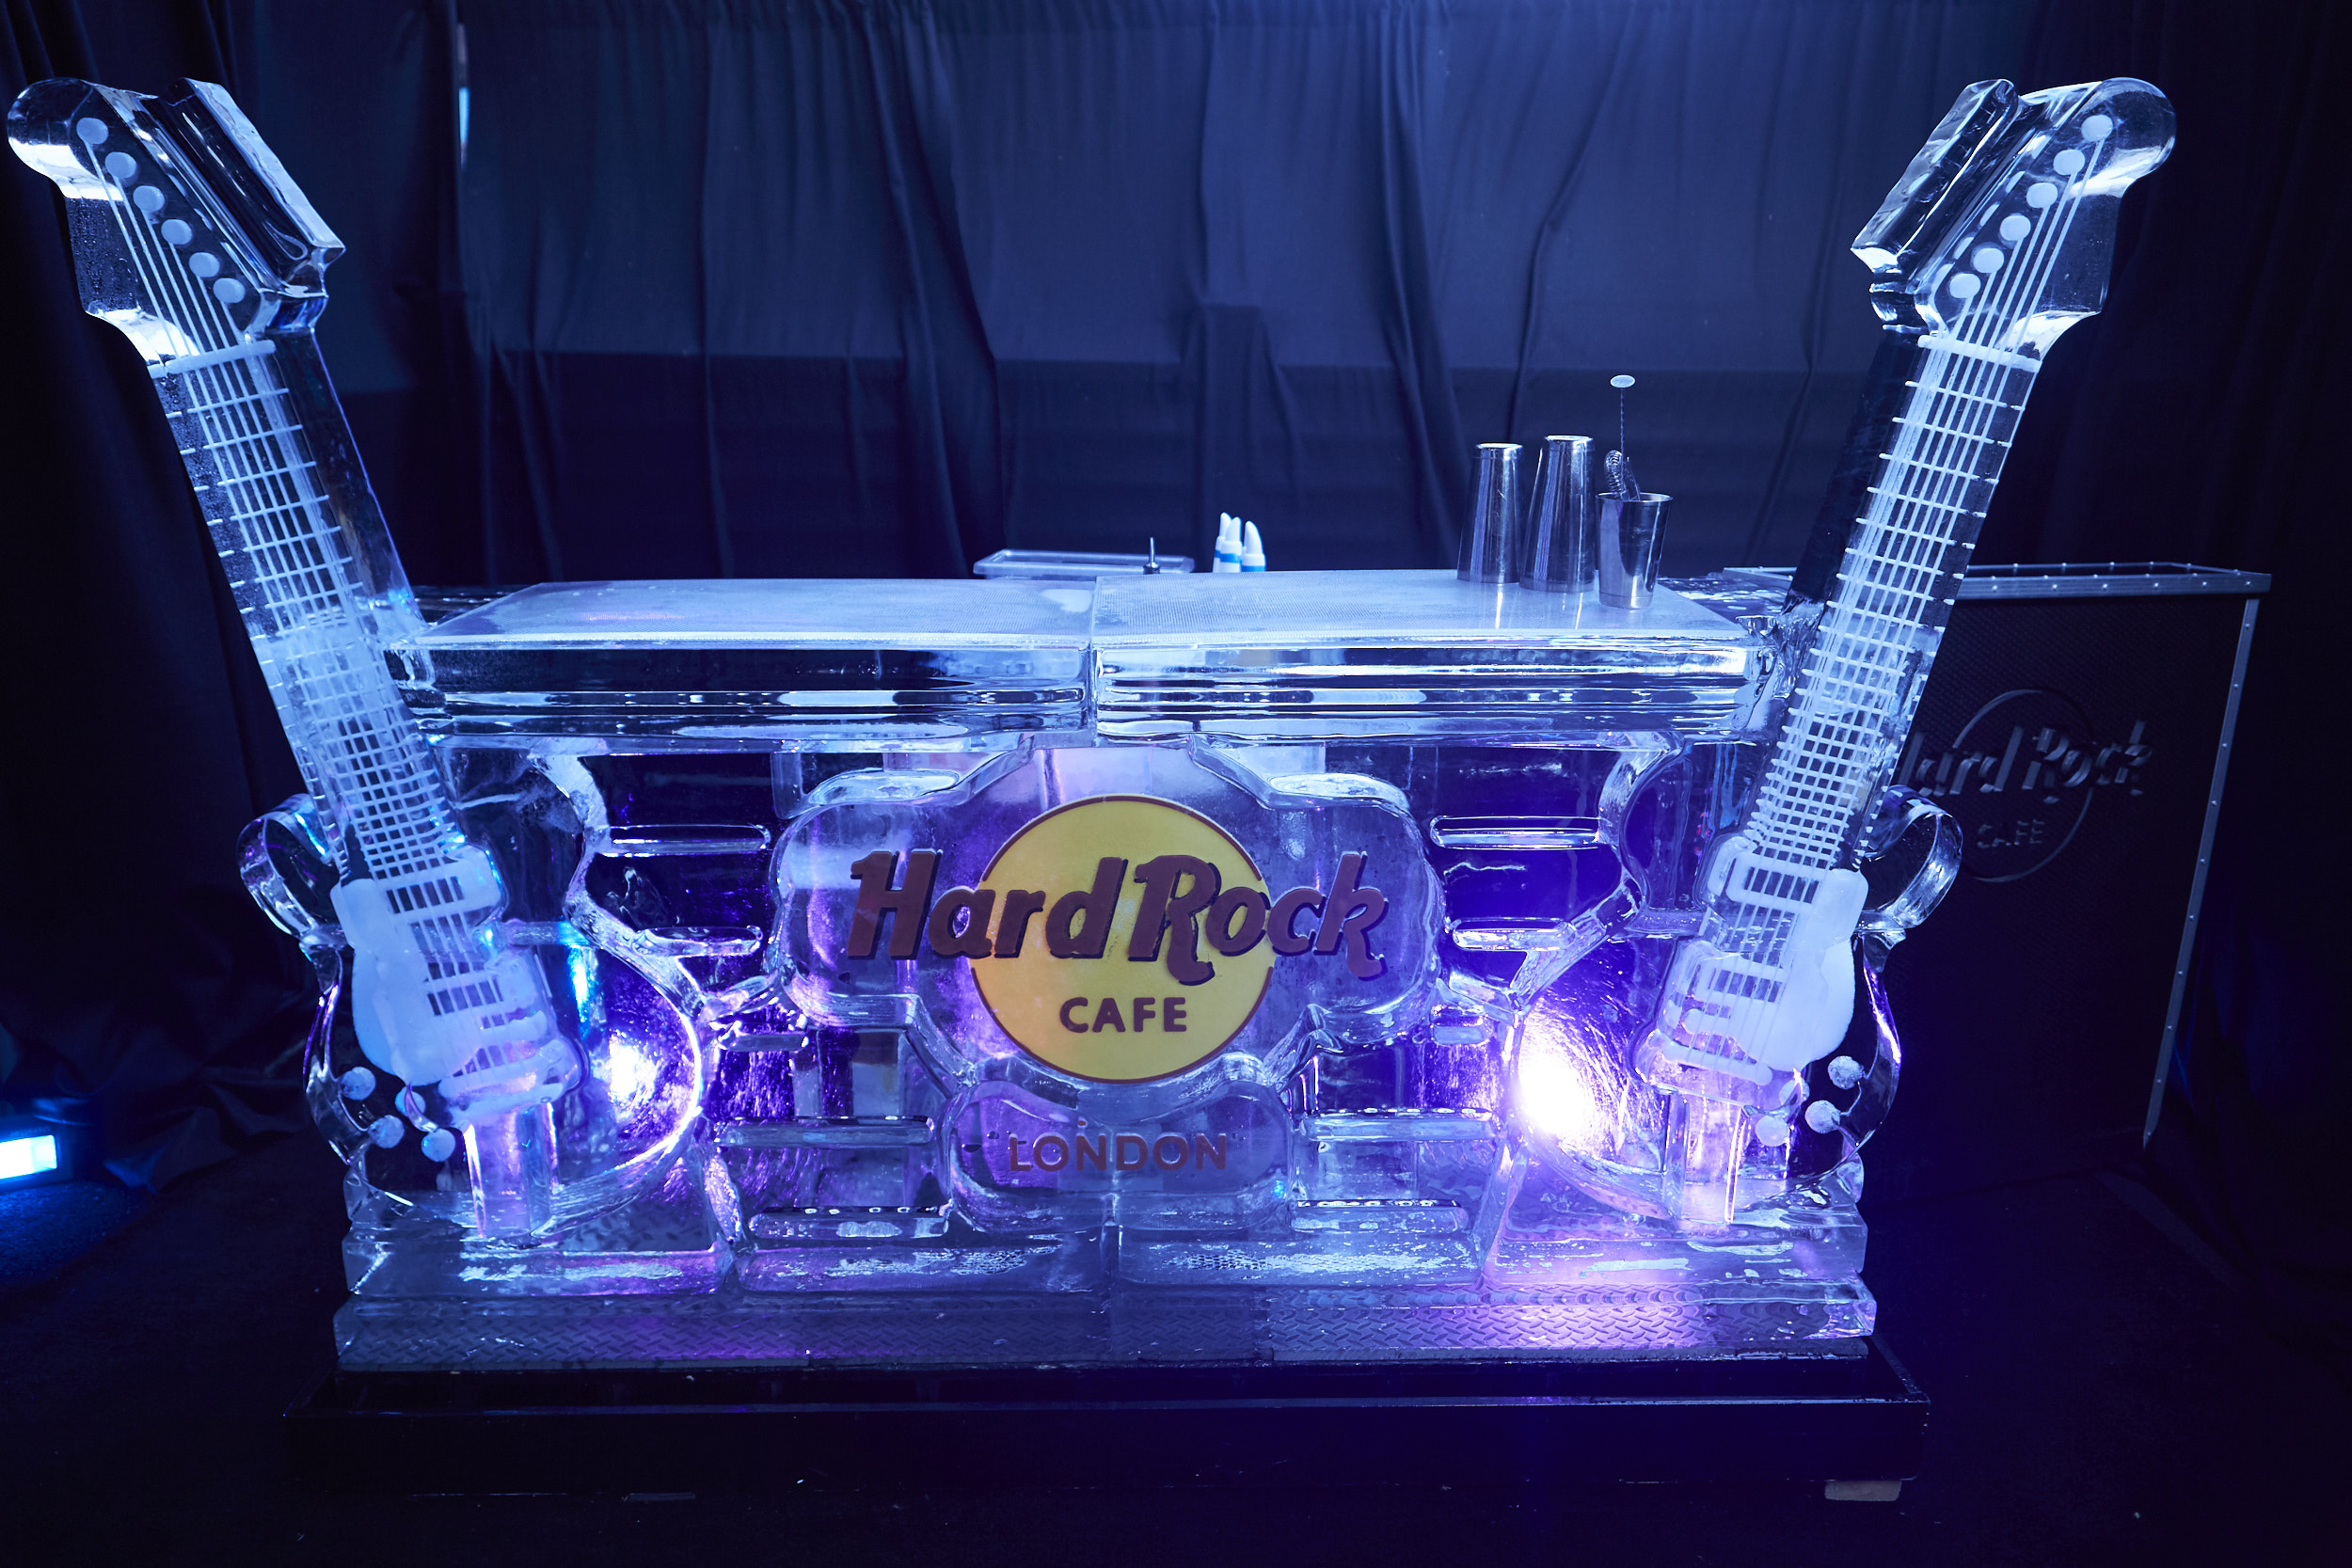 Hard Rock Cafe ice bar serving up delicious milkshakes.